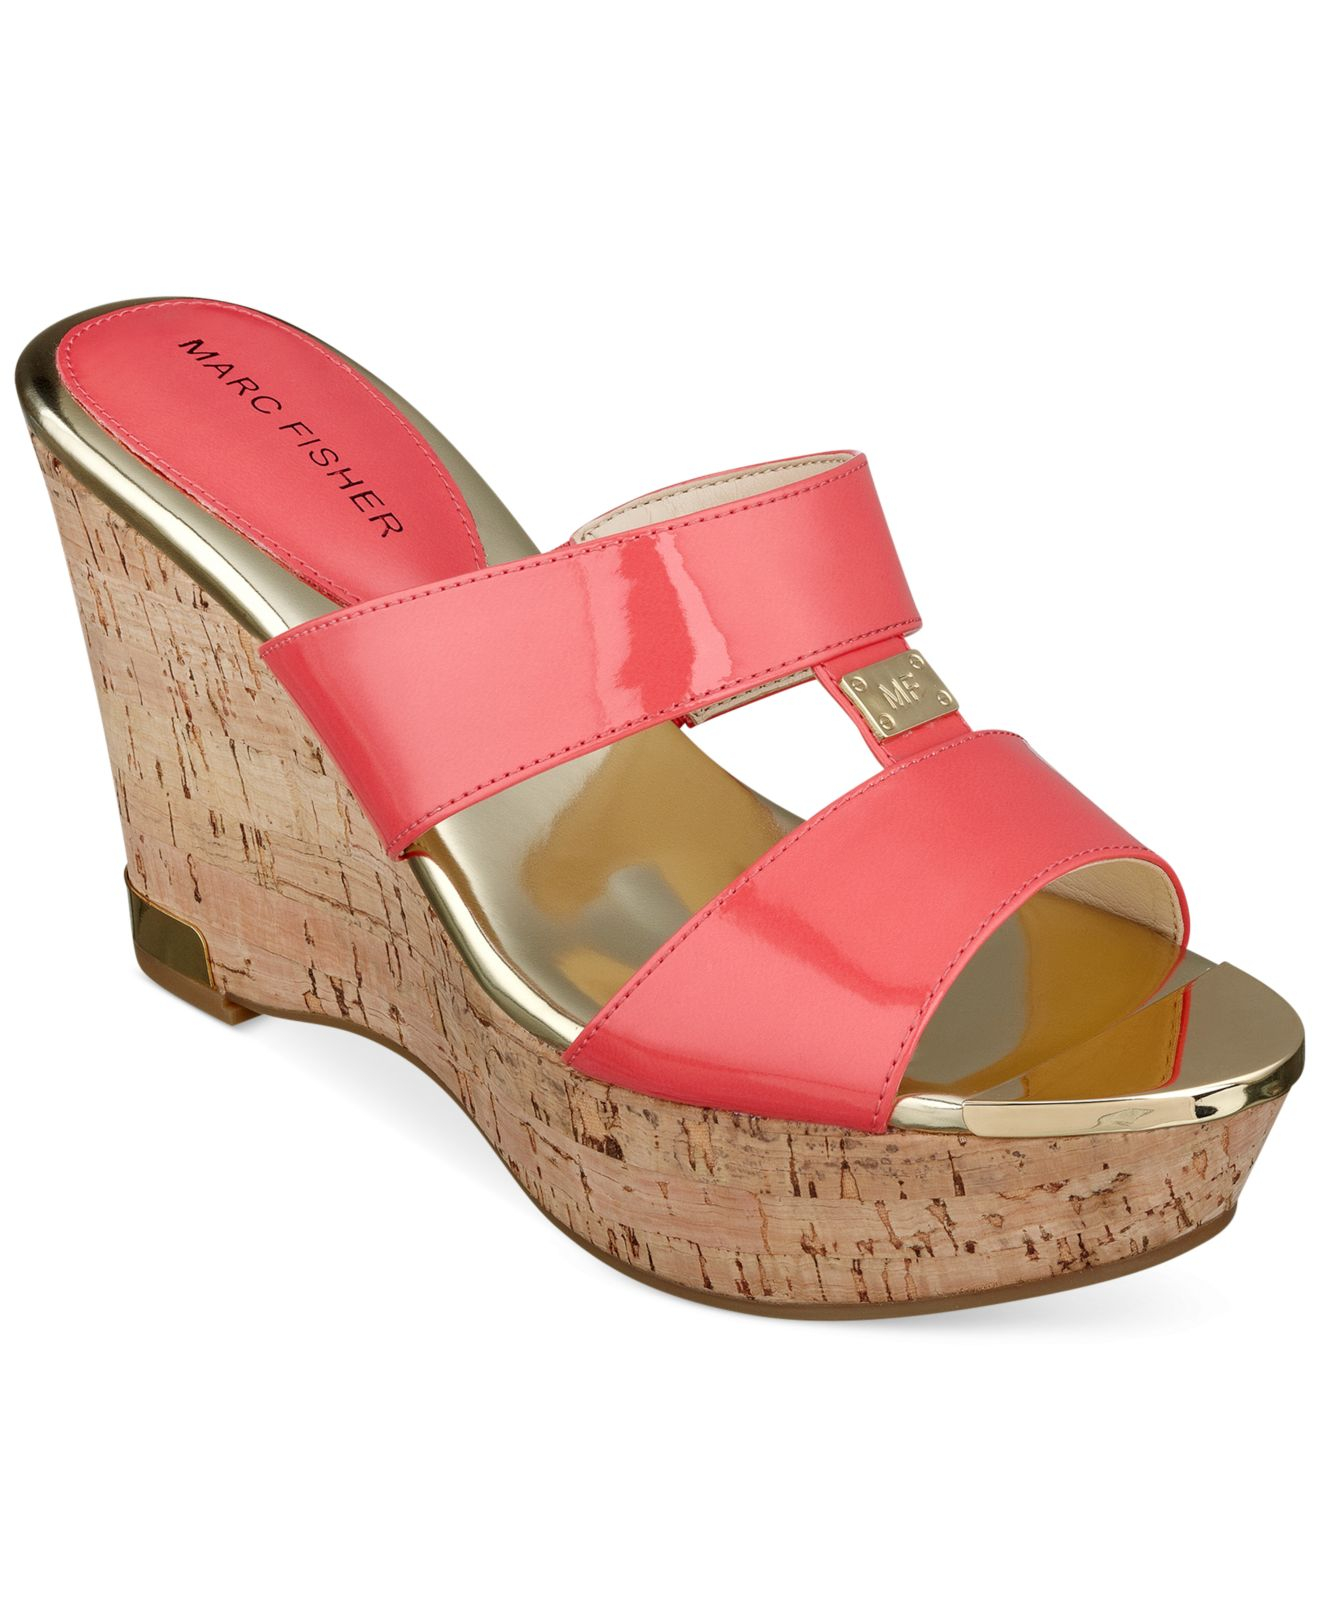 Lyst Marc Fisher Willian Platform Wedge Sandals in Pink